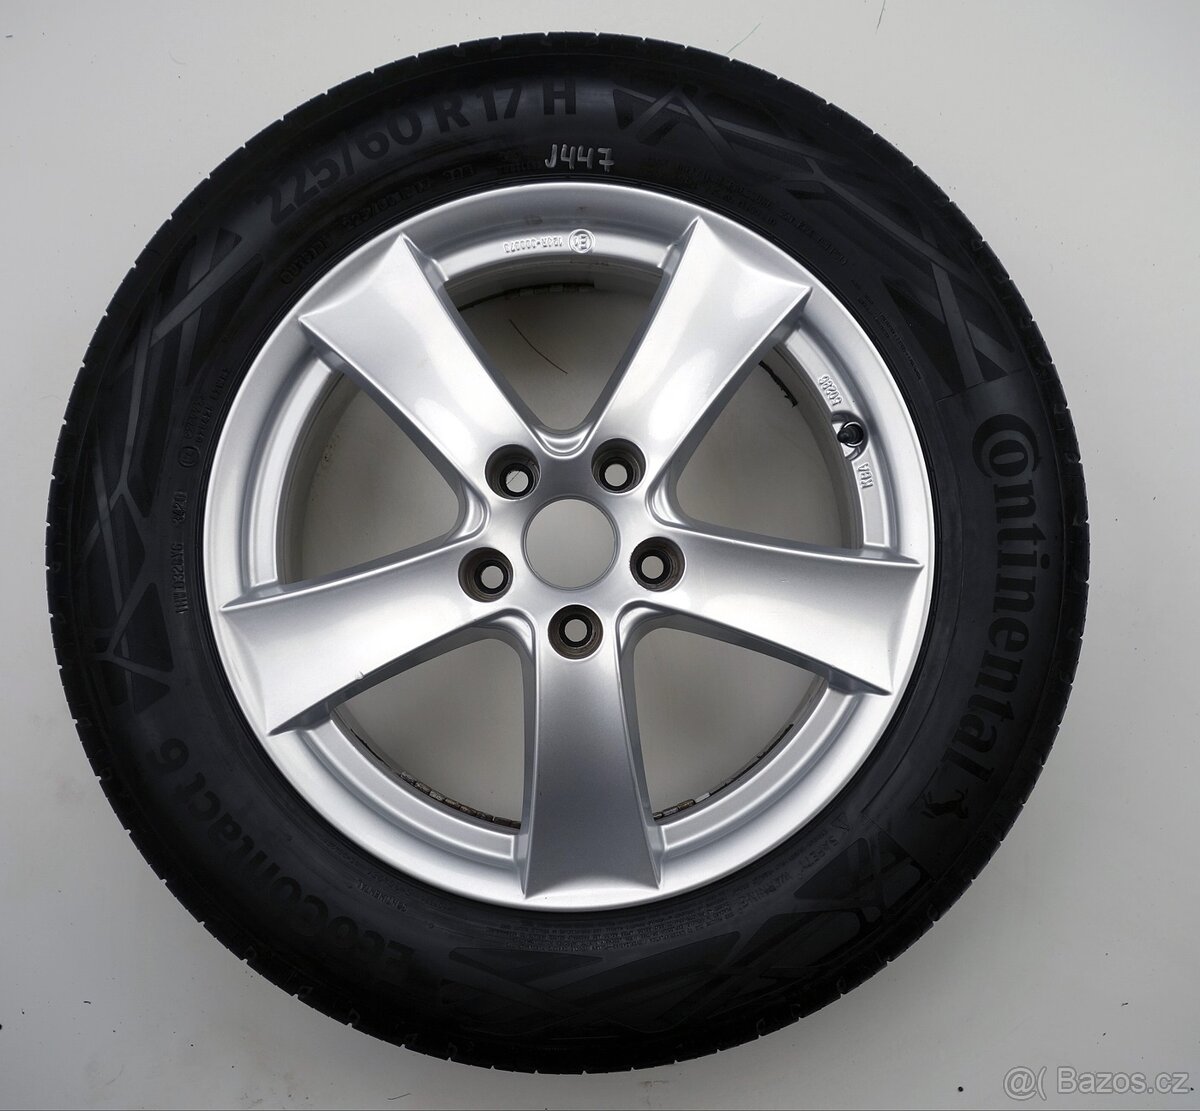 Hyundai Tucson - 17" alu kola - Letní pneu